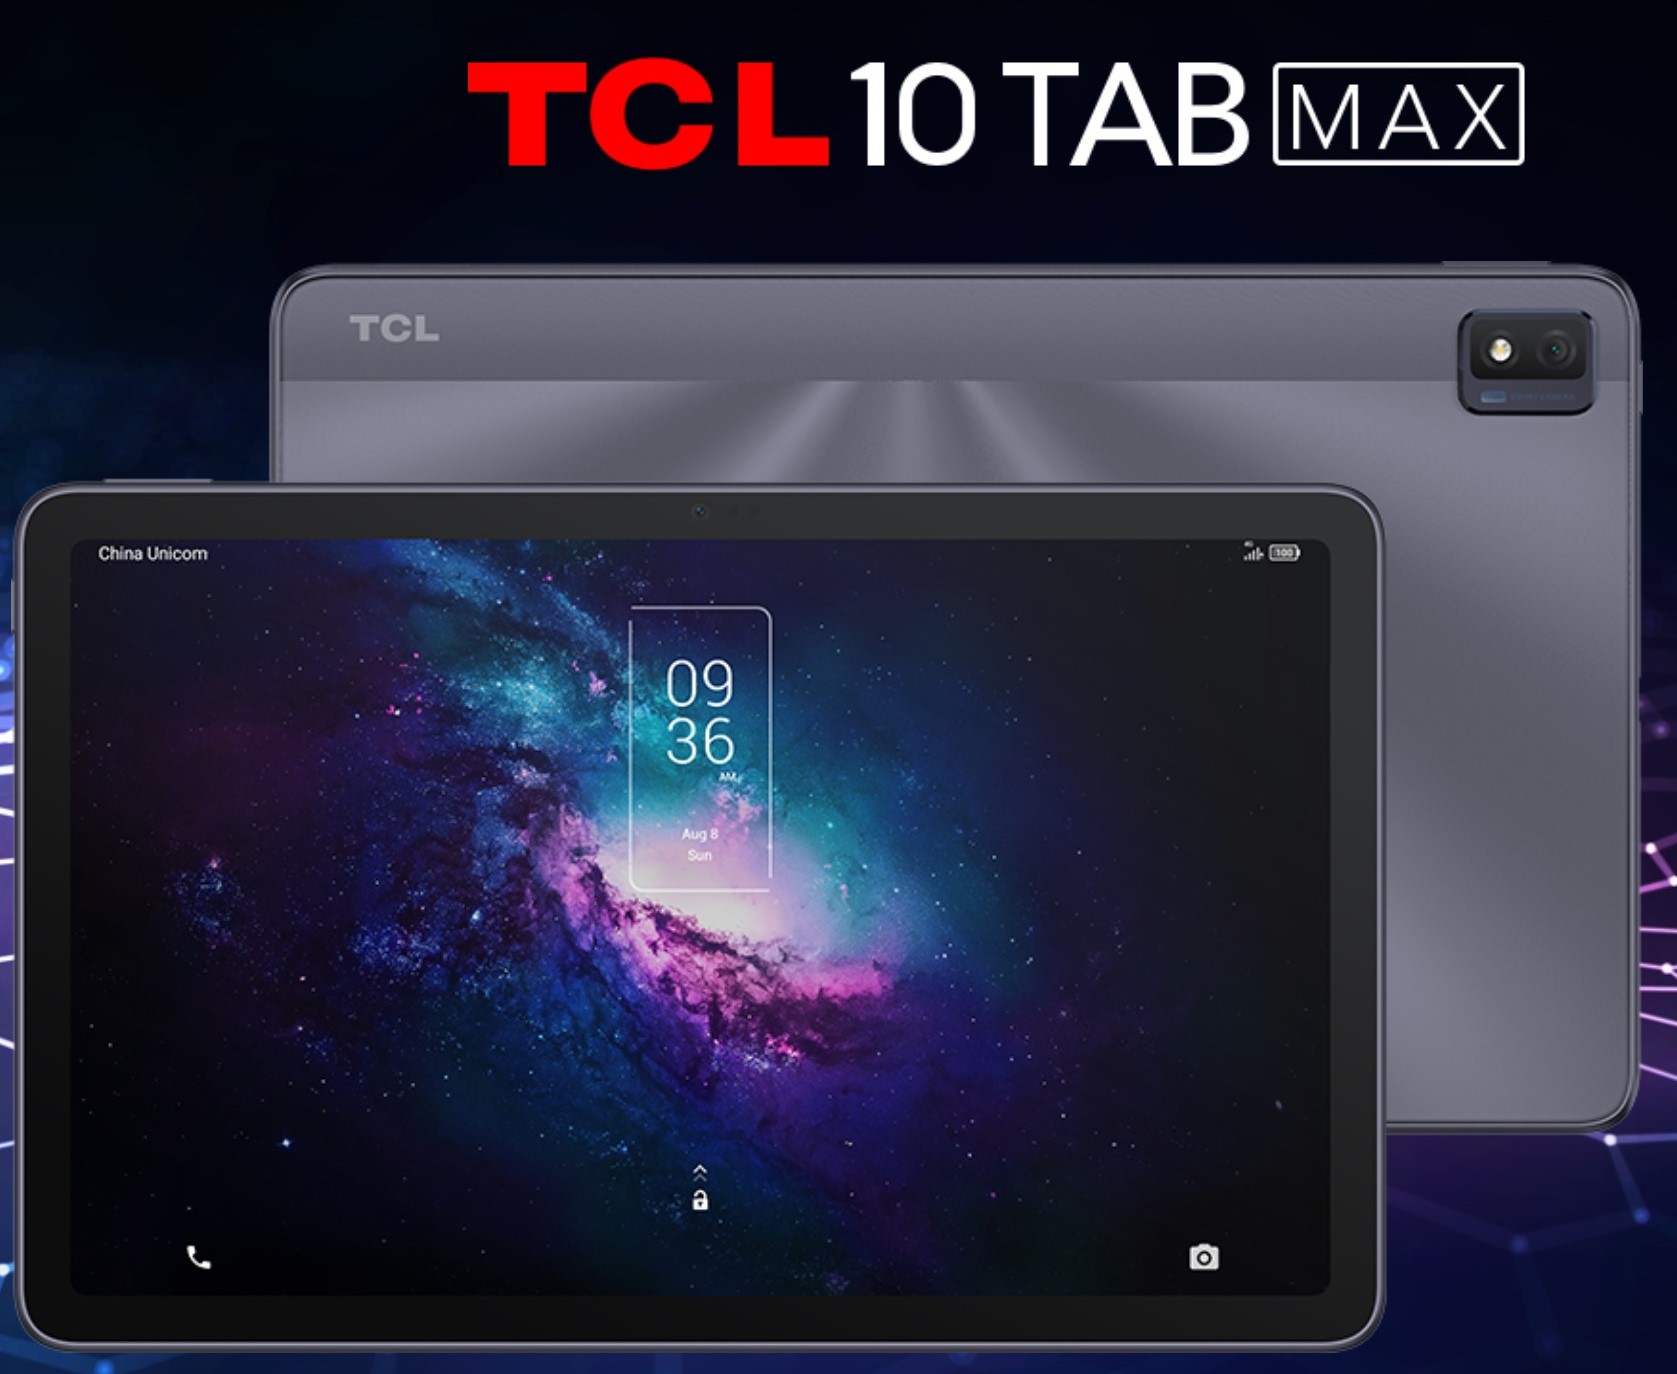 TCL 10 Tab Max 4g – Review